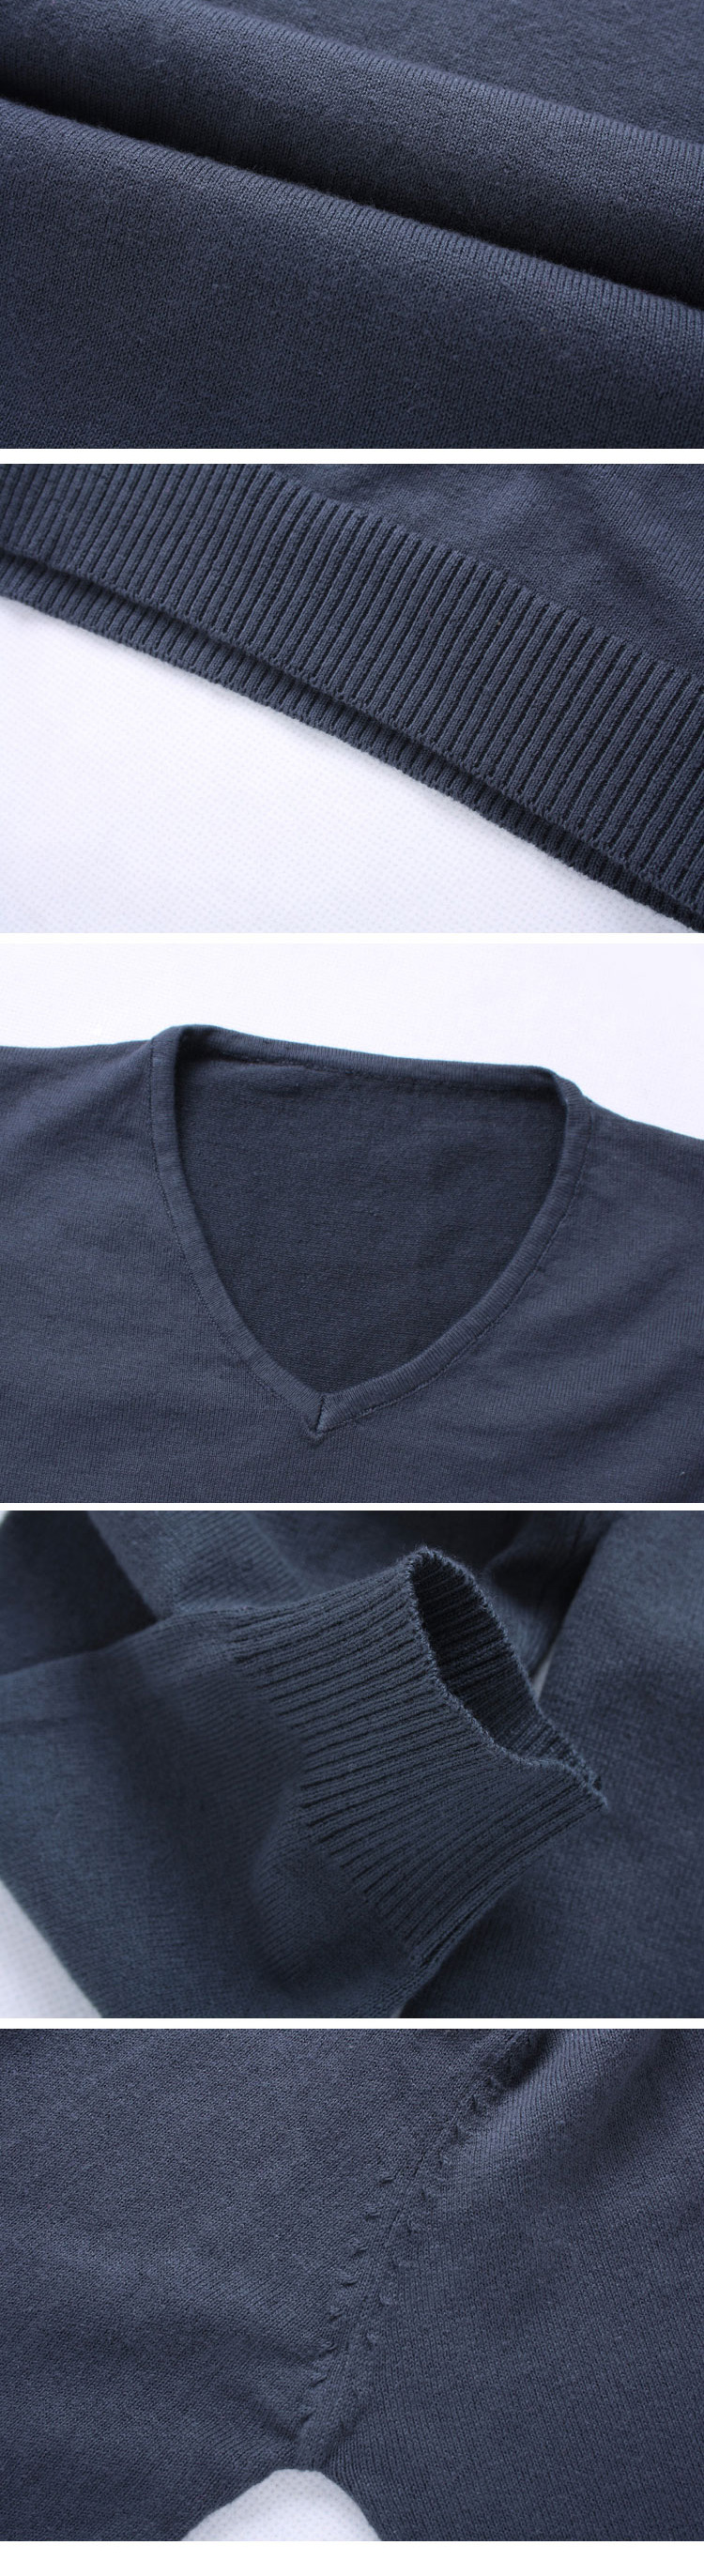 mssefn 2014新款韩版修身男士针织衫长袖毛衣V领毛衫打底衫2111-031